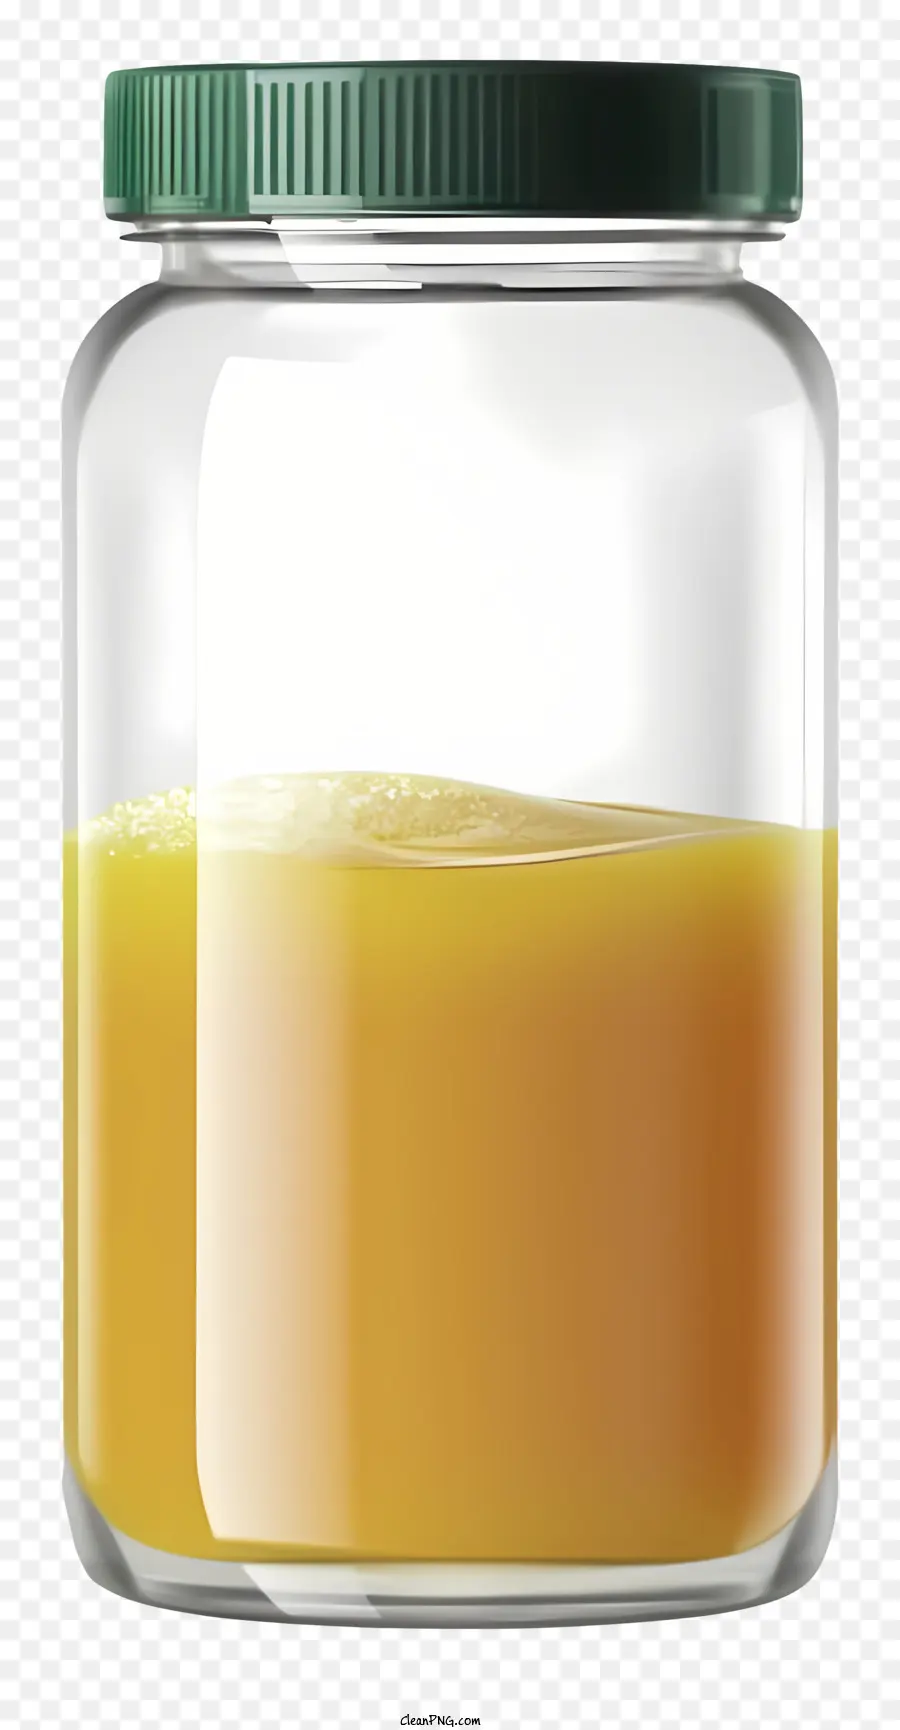 orange juice glass jar black background bright orange metal screw cap